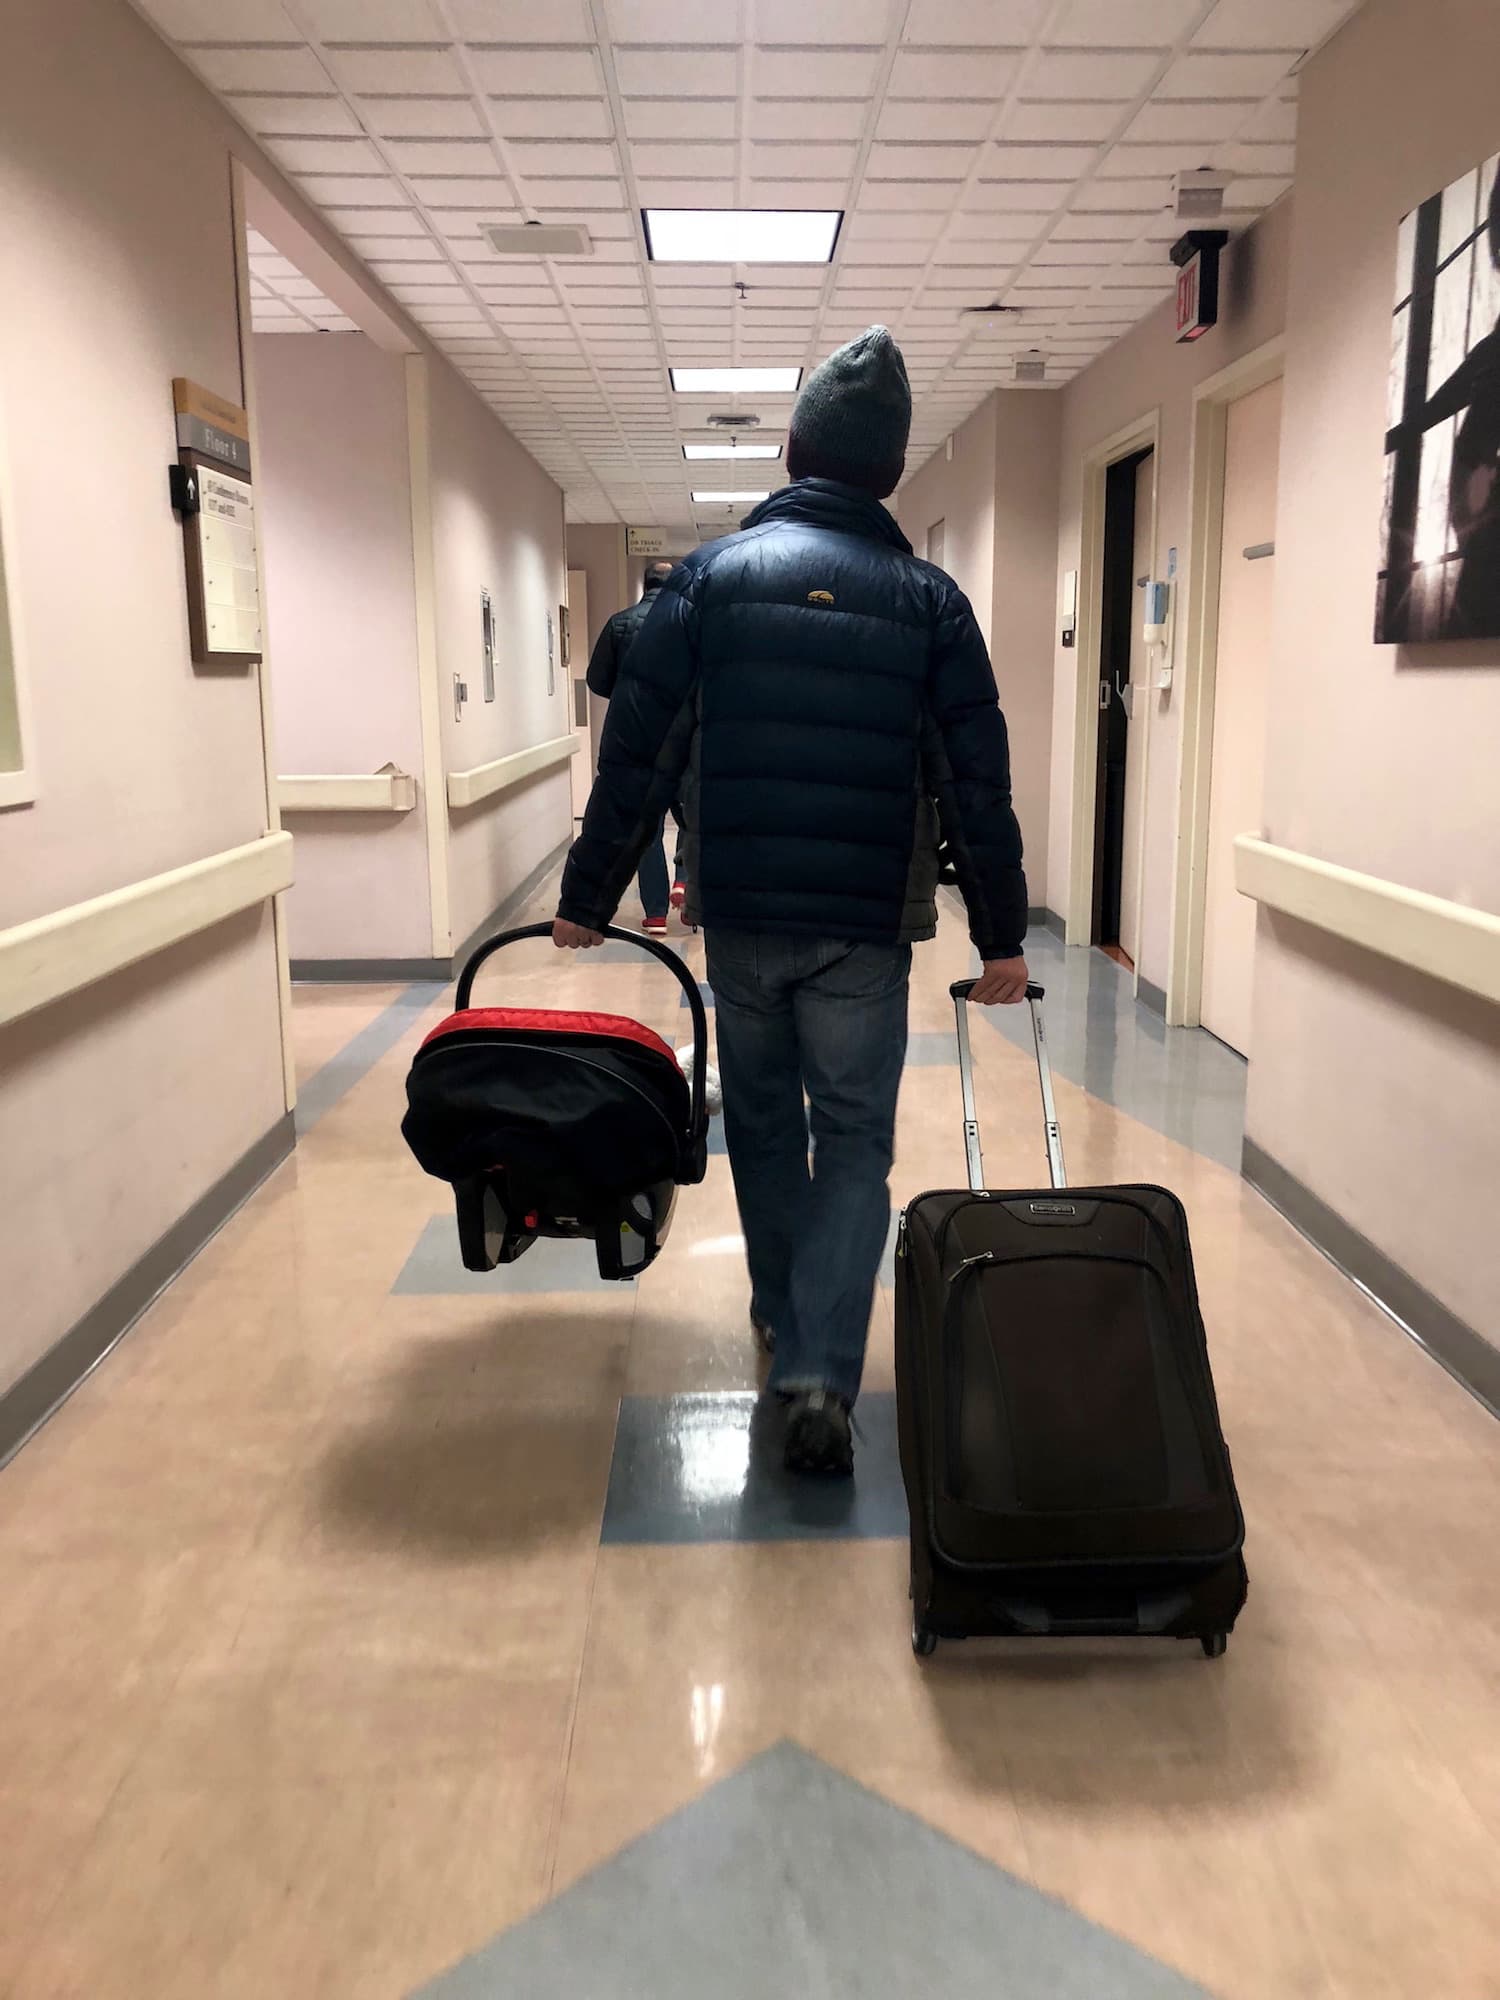 Family leaving the hospital